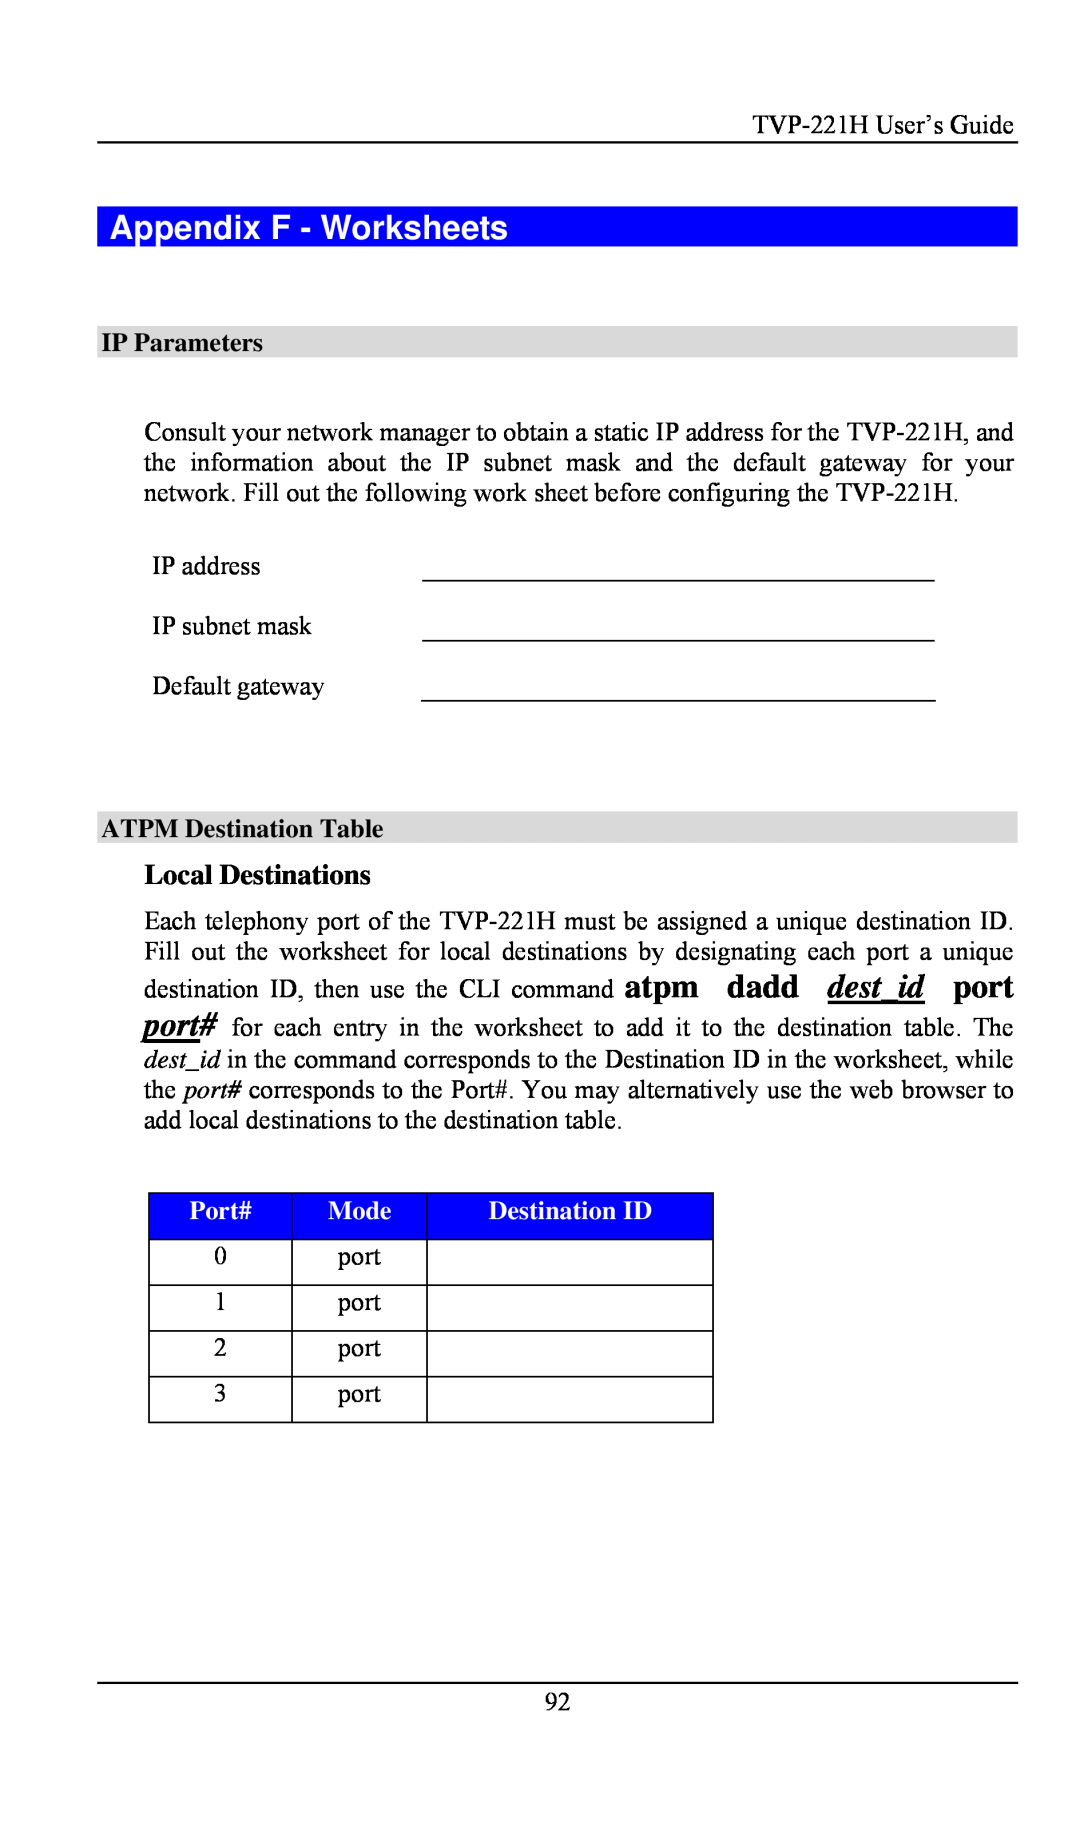 TRENDnet TVP- 221H manual Appendix F - Worksheets, Local Destinations, IP Parameters, ATPM Destination Table, Port#, Mode 